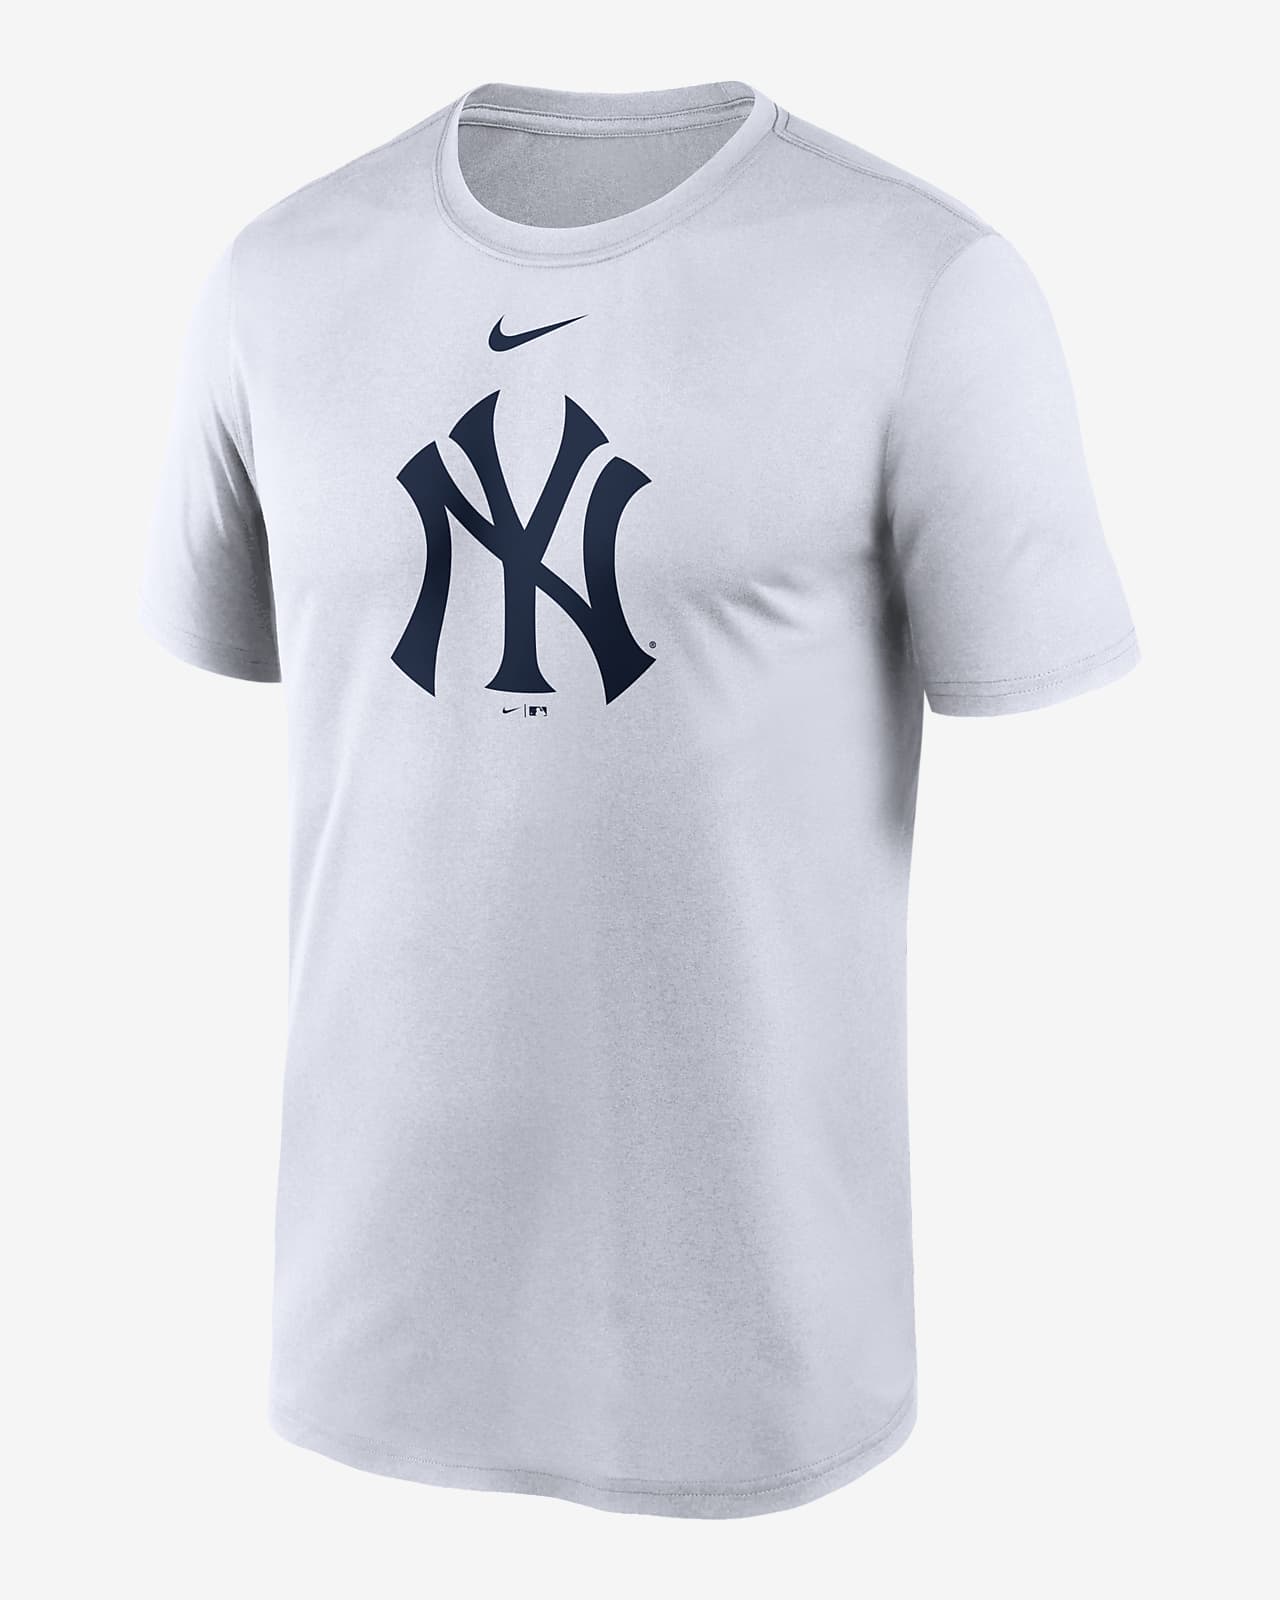 new york yankees mens shirts